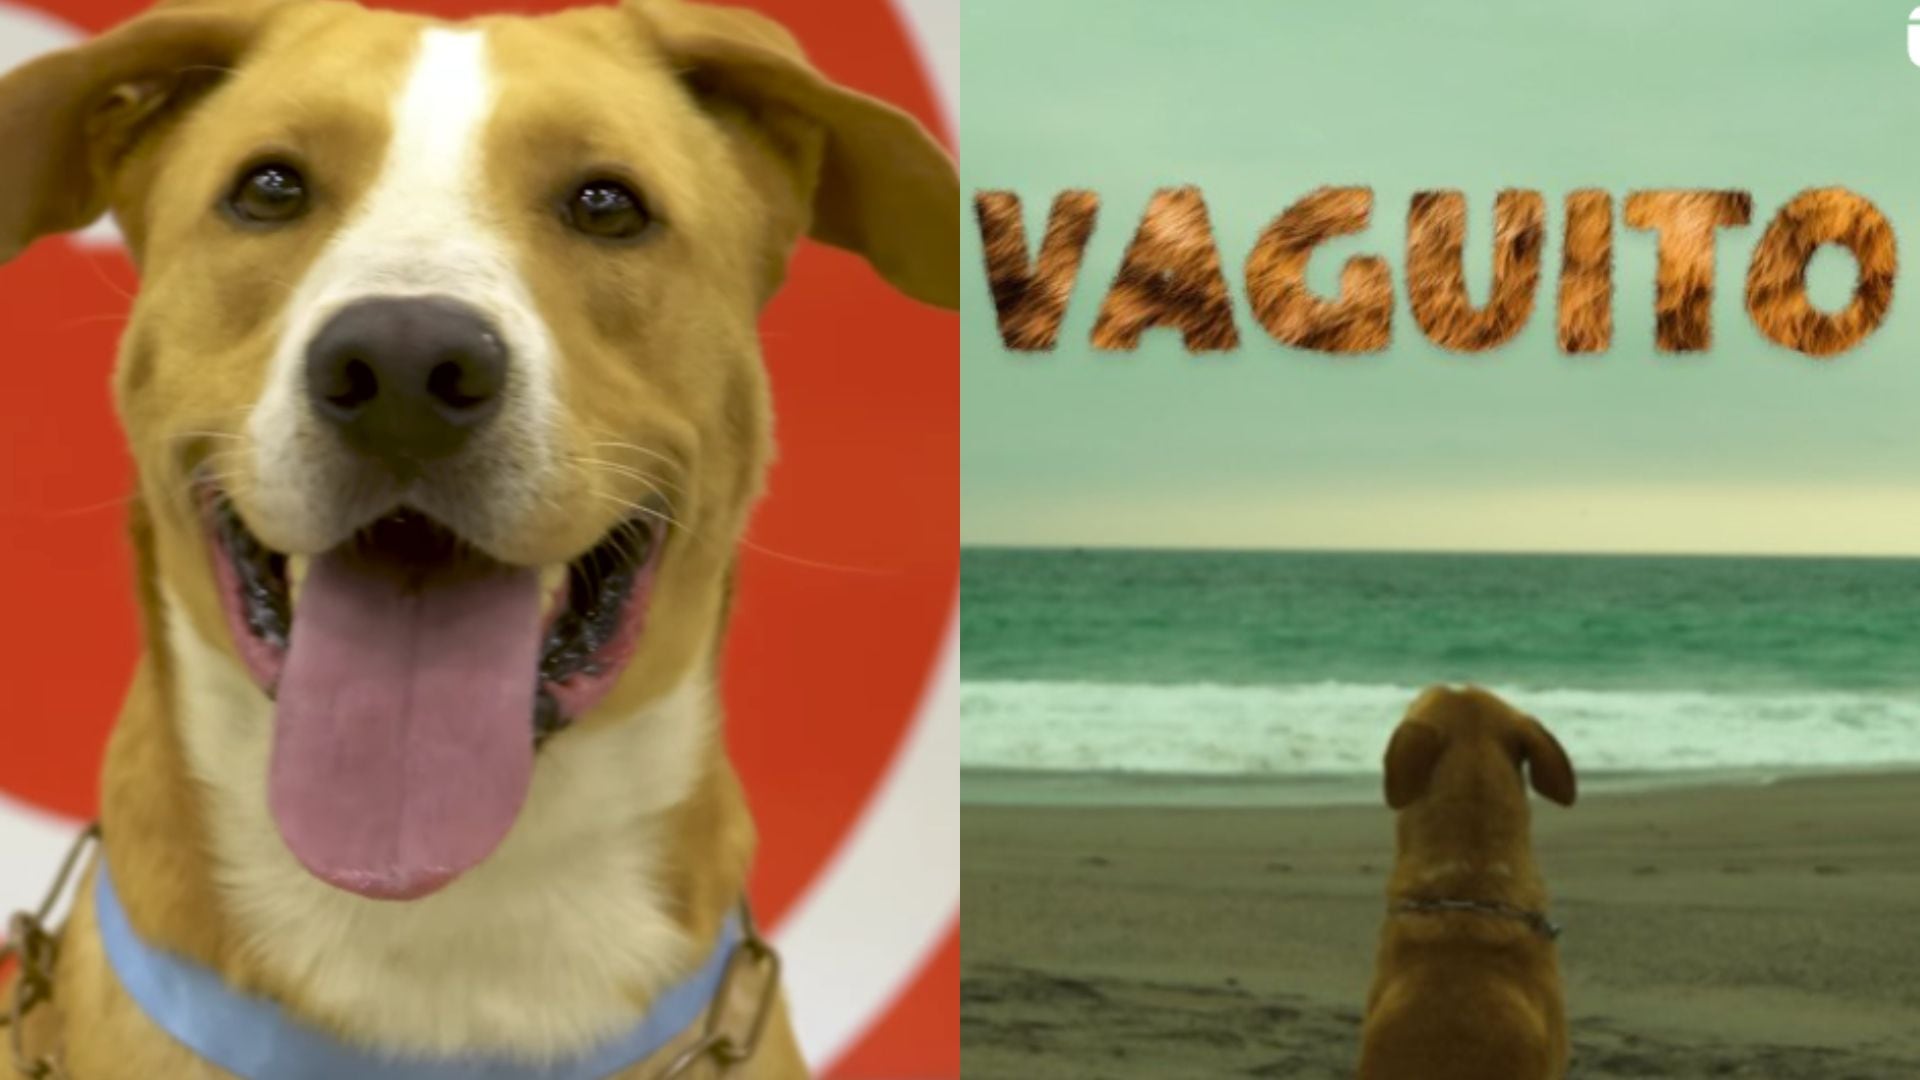 'Vaguito' se estrenó el 18 de abril y ya se espera una segunda parte. El director habló al respecto.